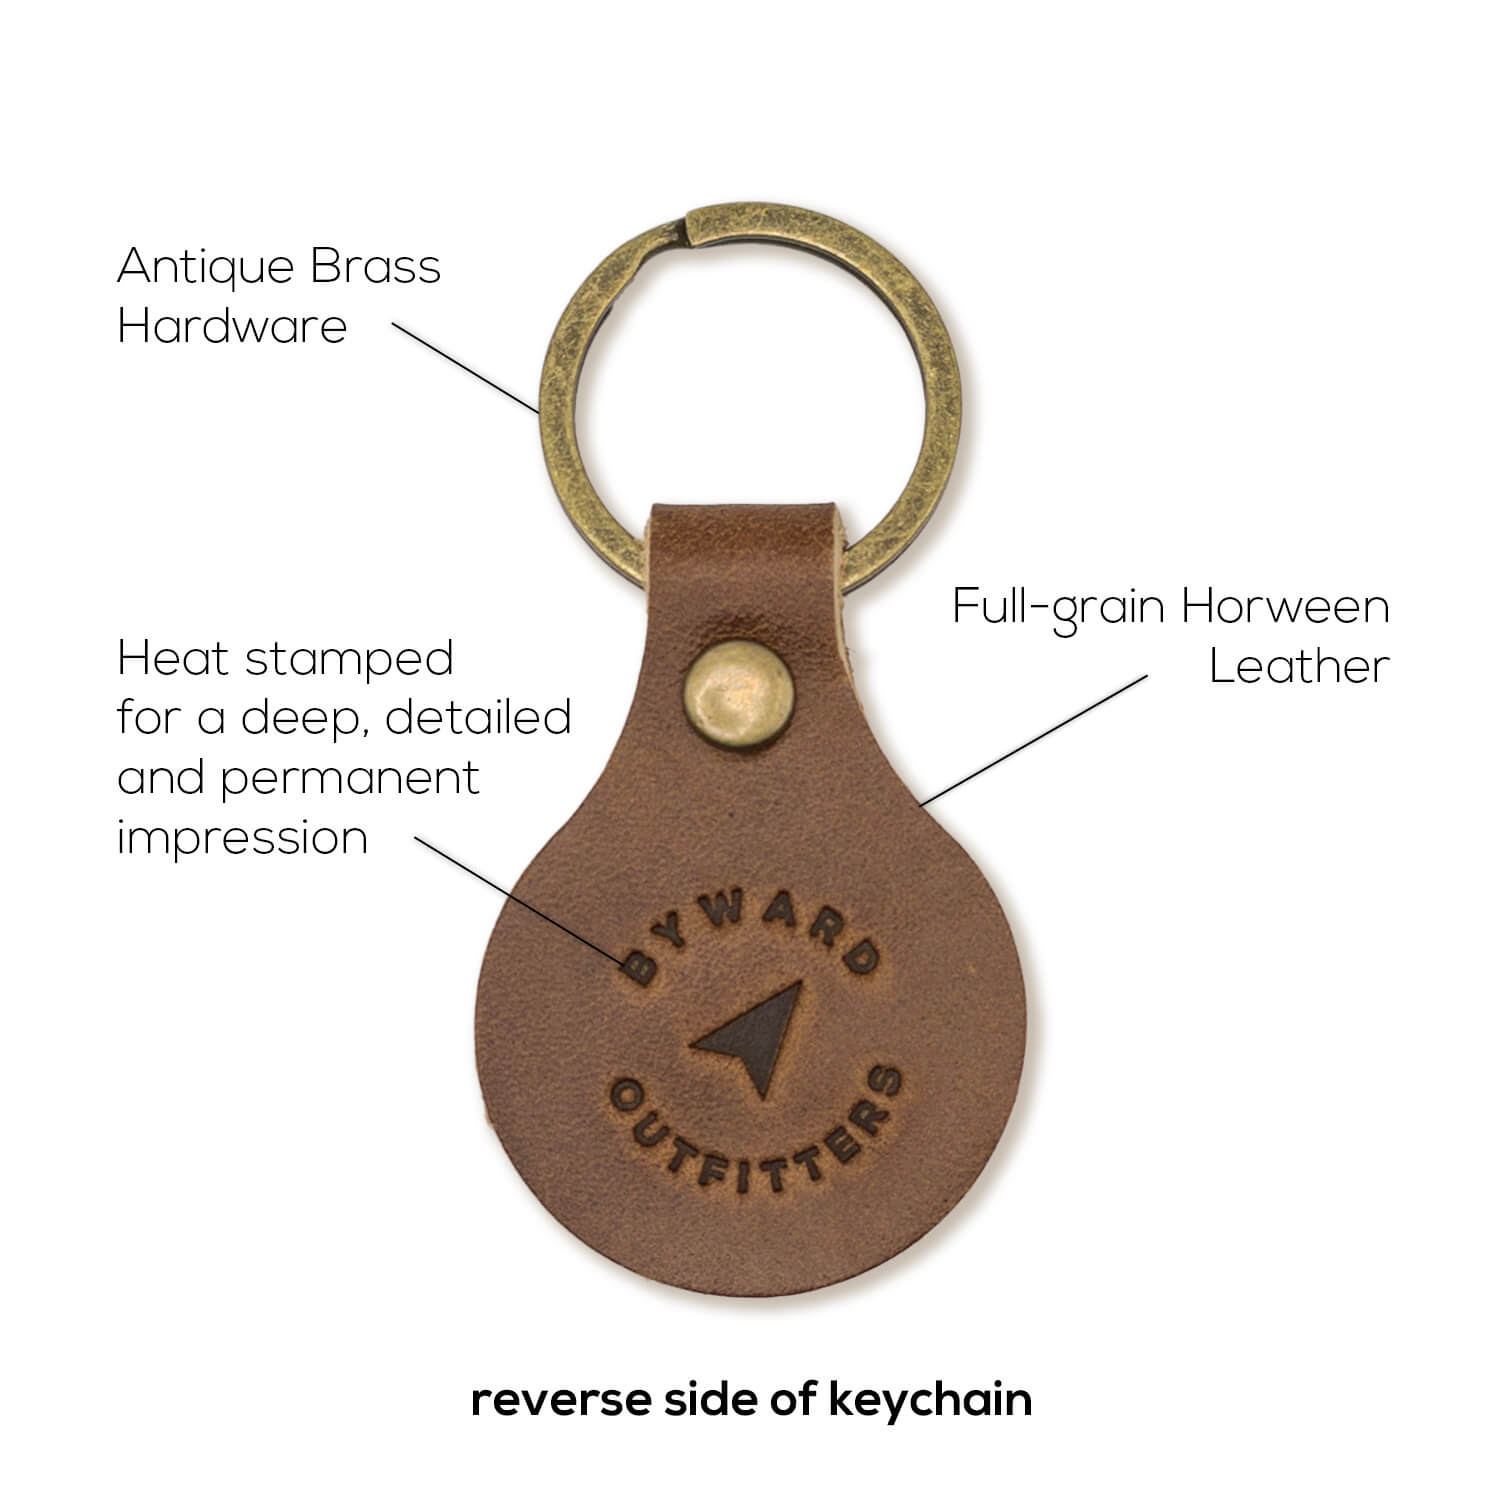 MOM - Leather Keychain